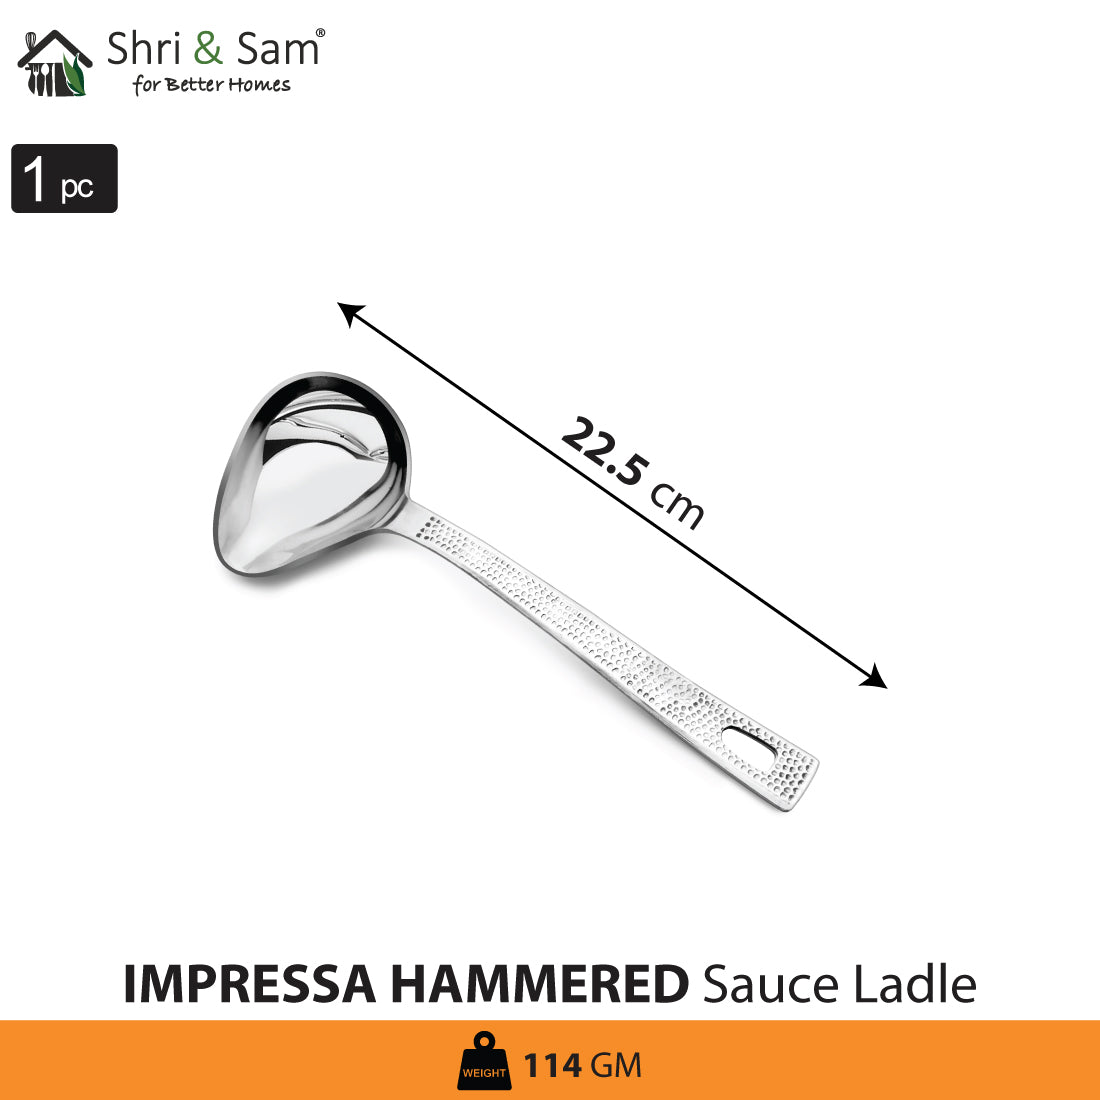 Stainless Steel Sauce Ladle Impressa Hammered